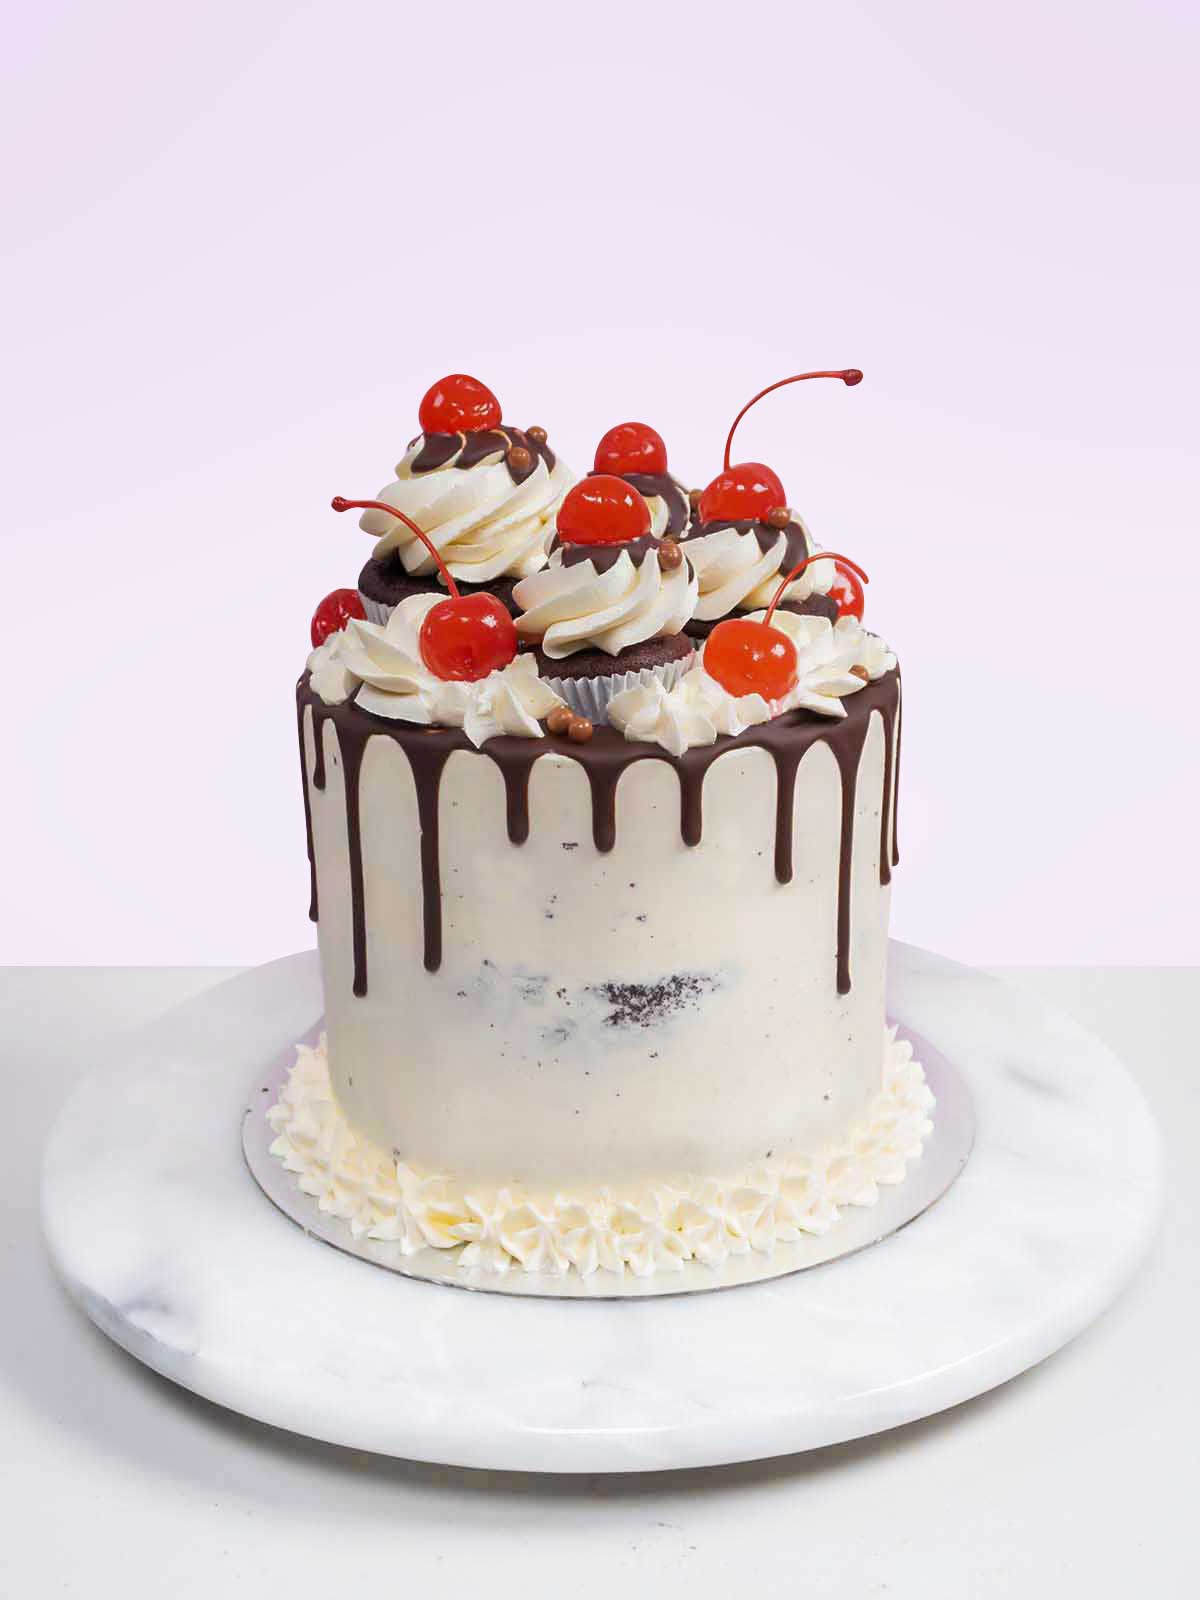 80th Birthday Cakes - Quality Cake Company - Tamworth